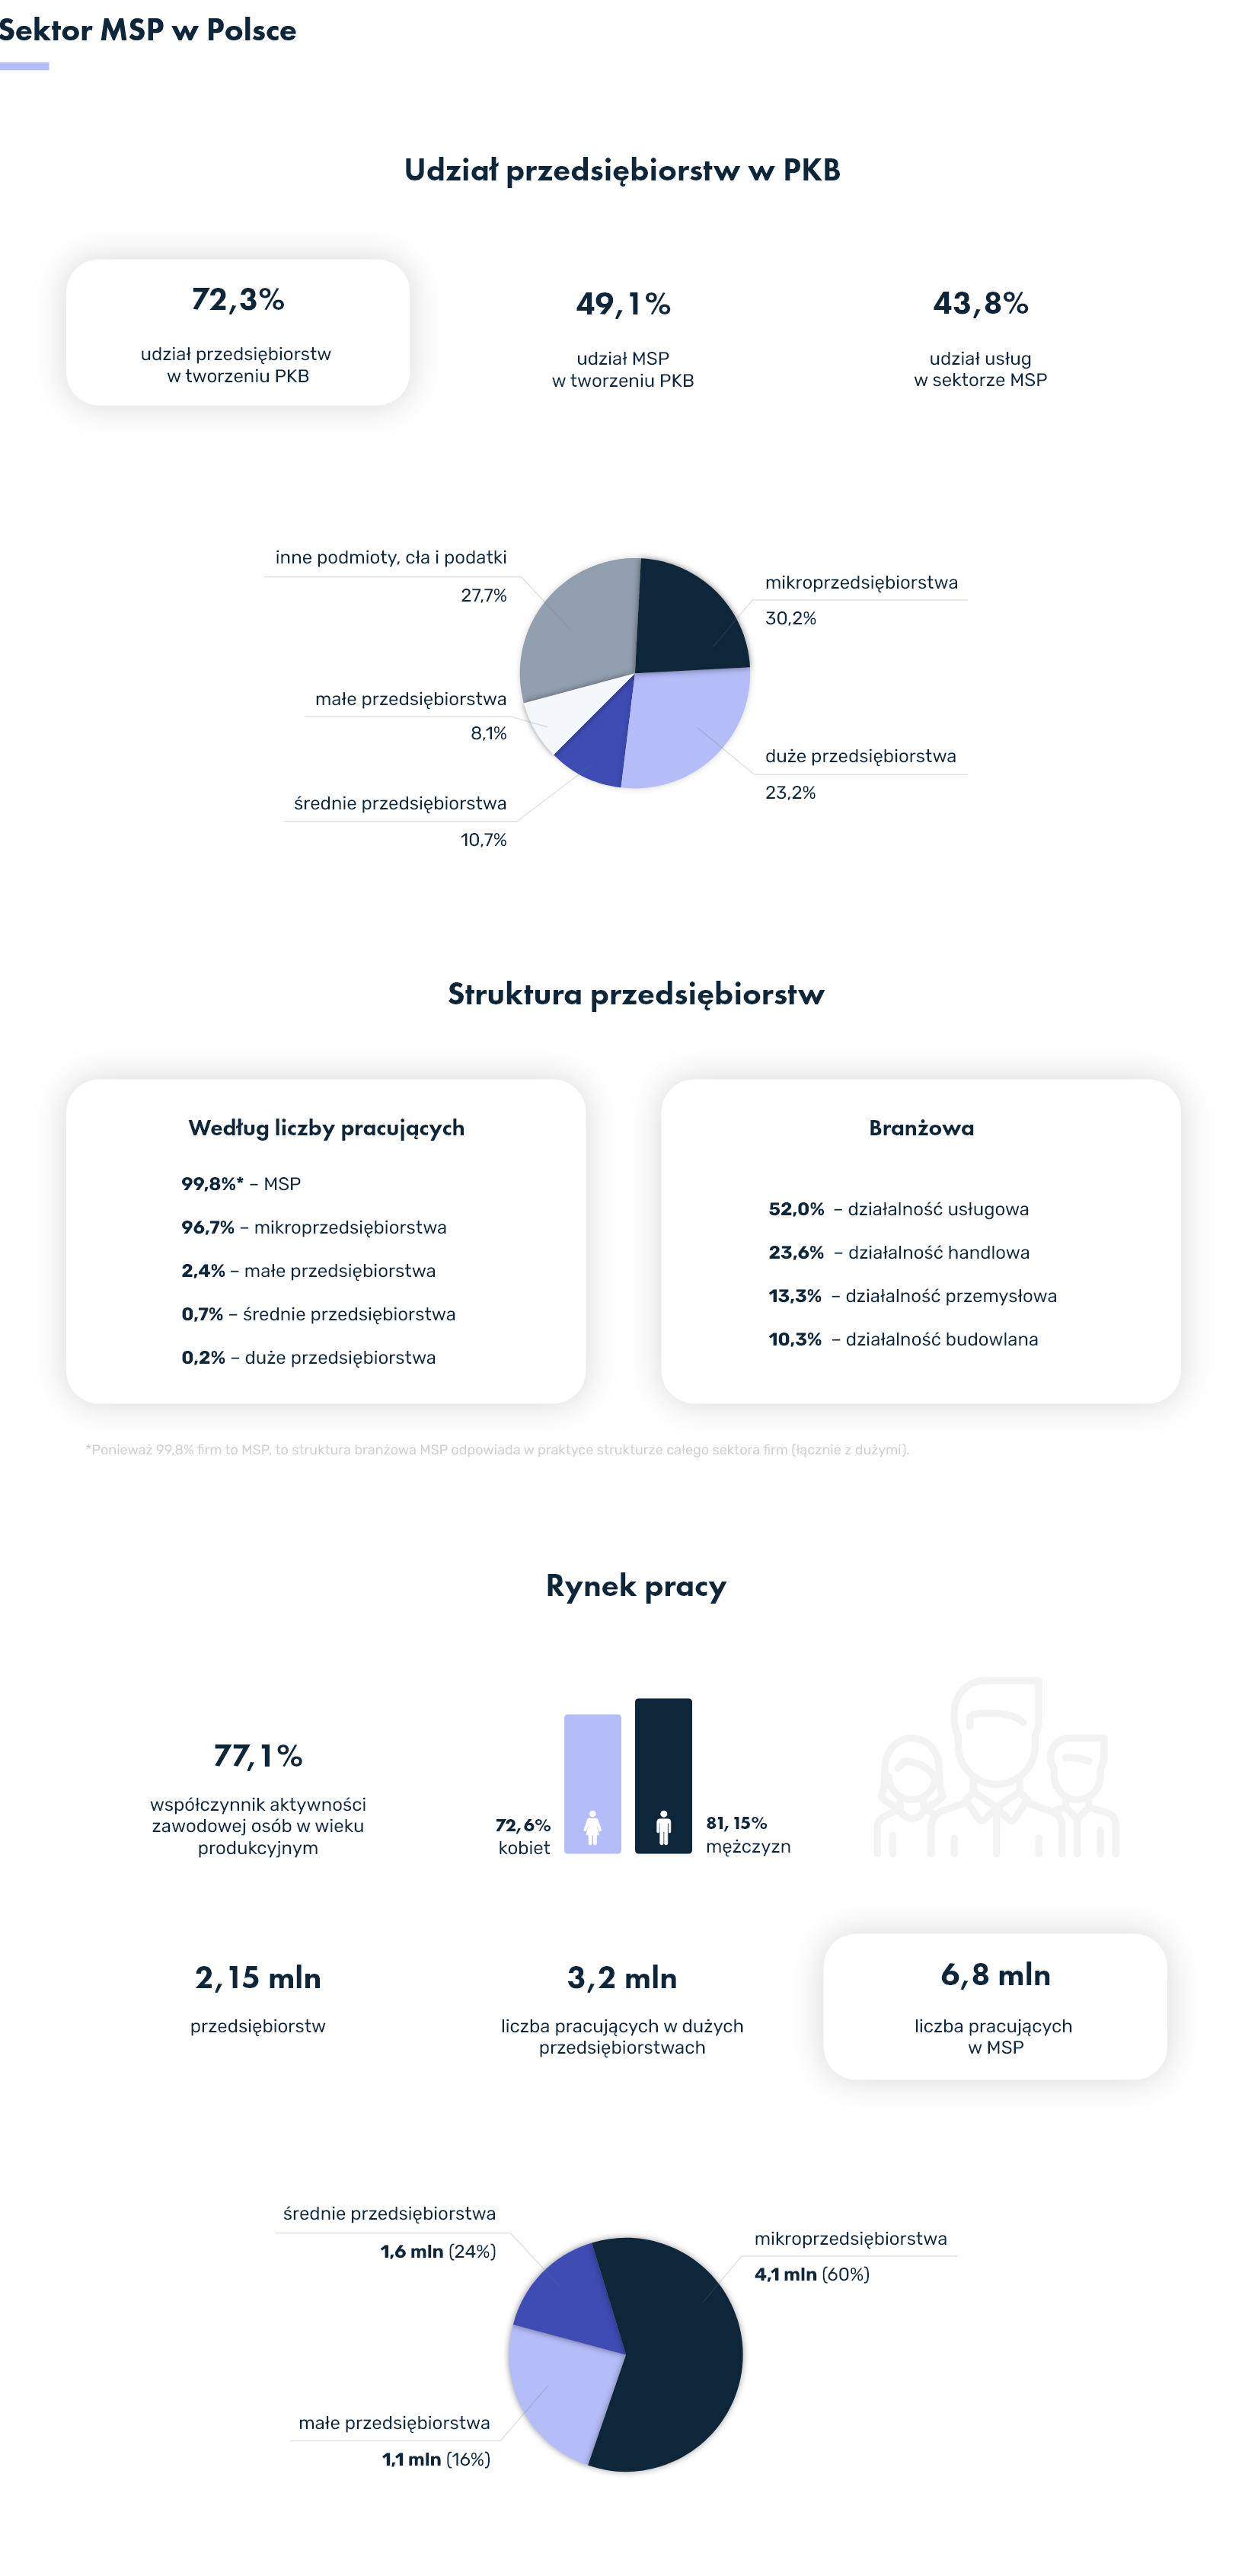 SME sector in Poland